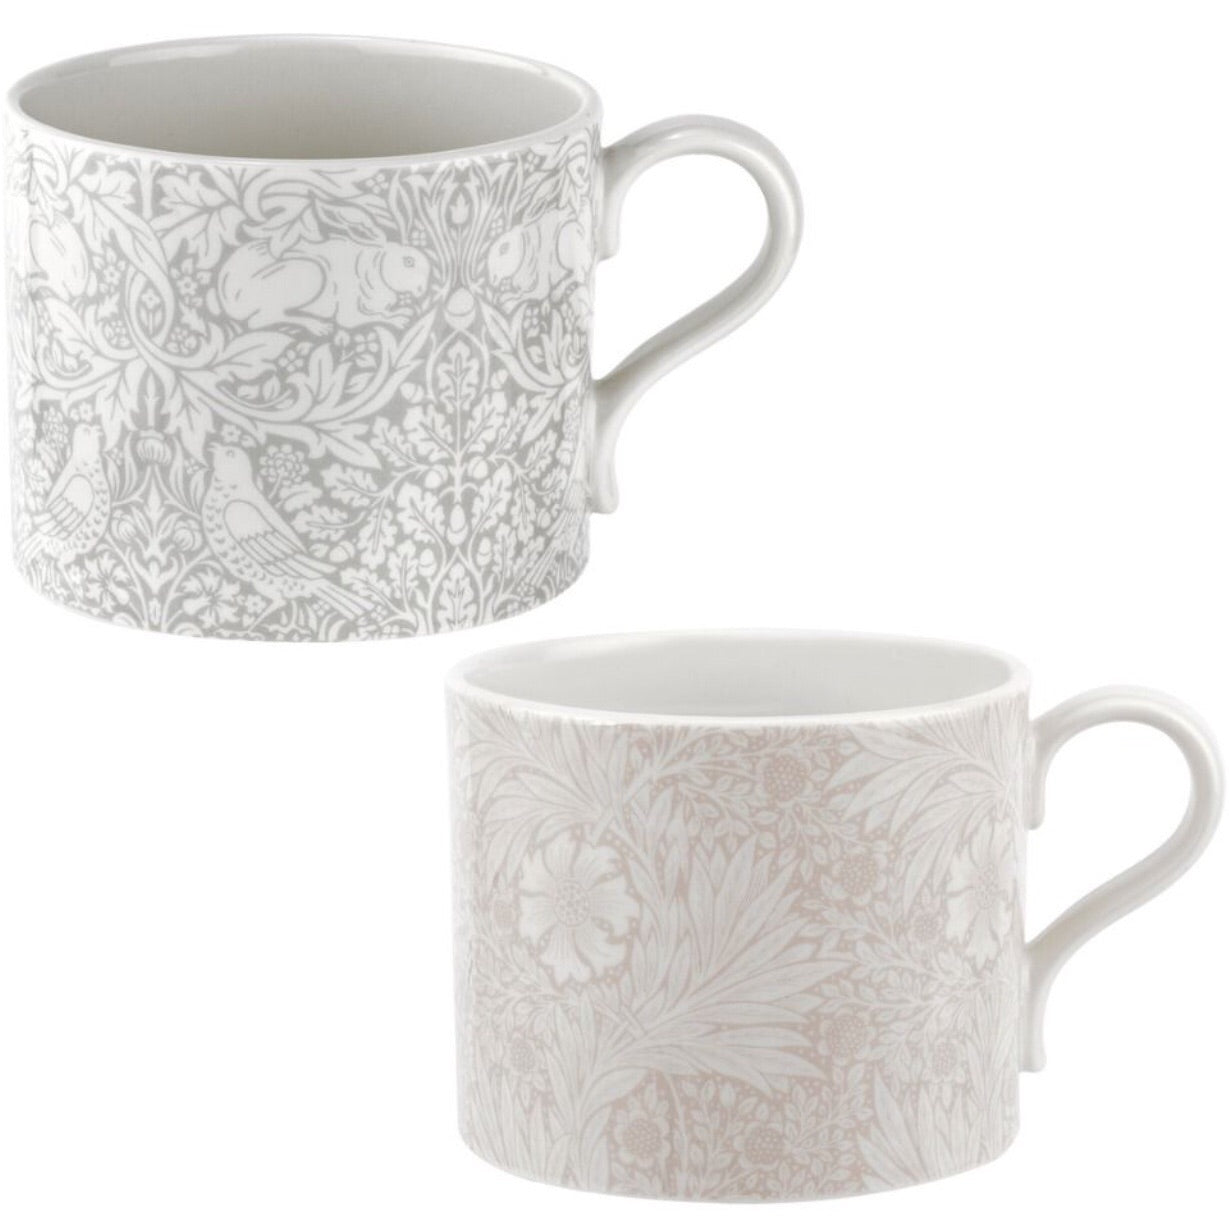 Morris & Co. Set of 2 Mugs - Pure Morris Marigold and Brer Rabbit